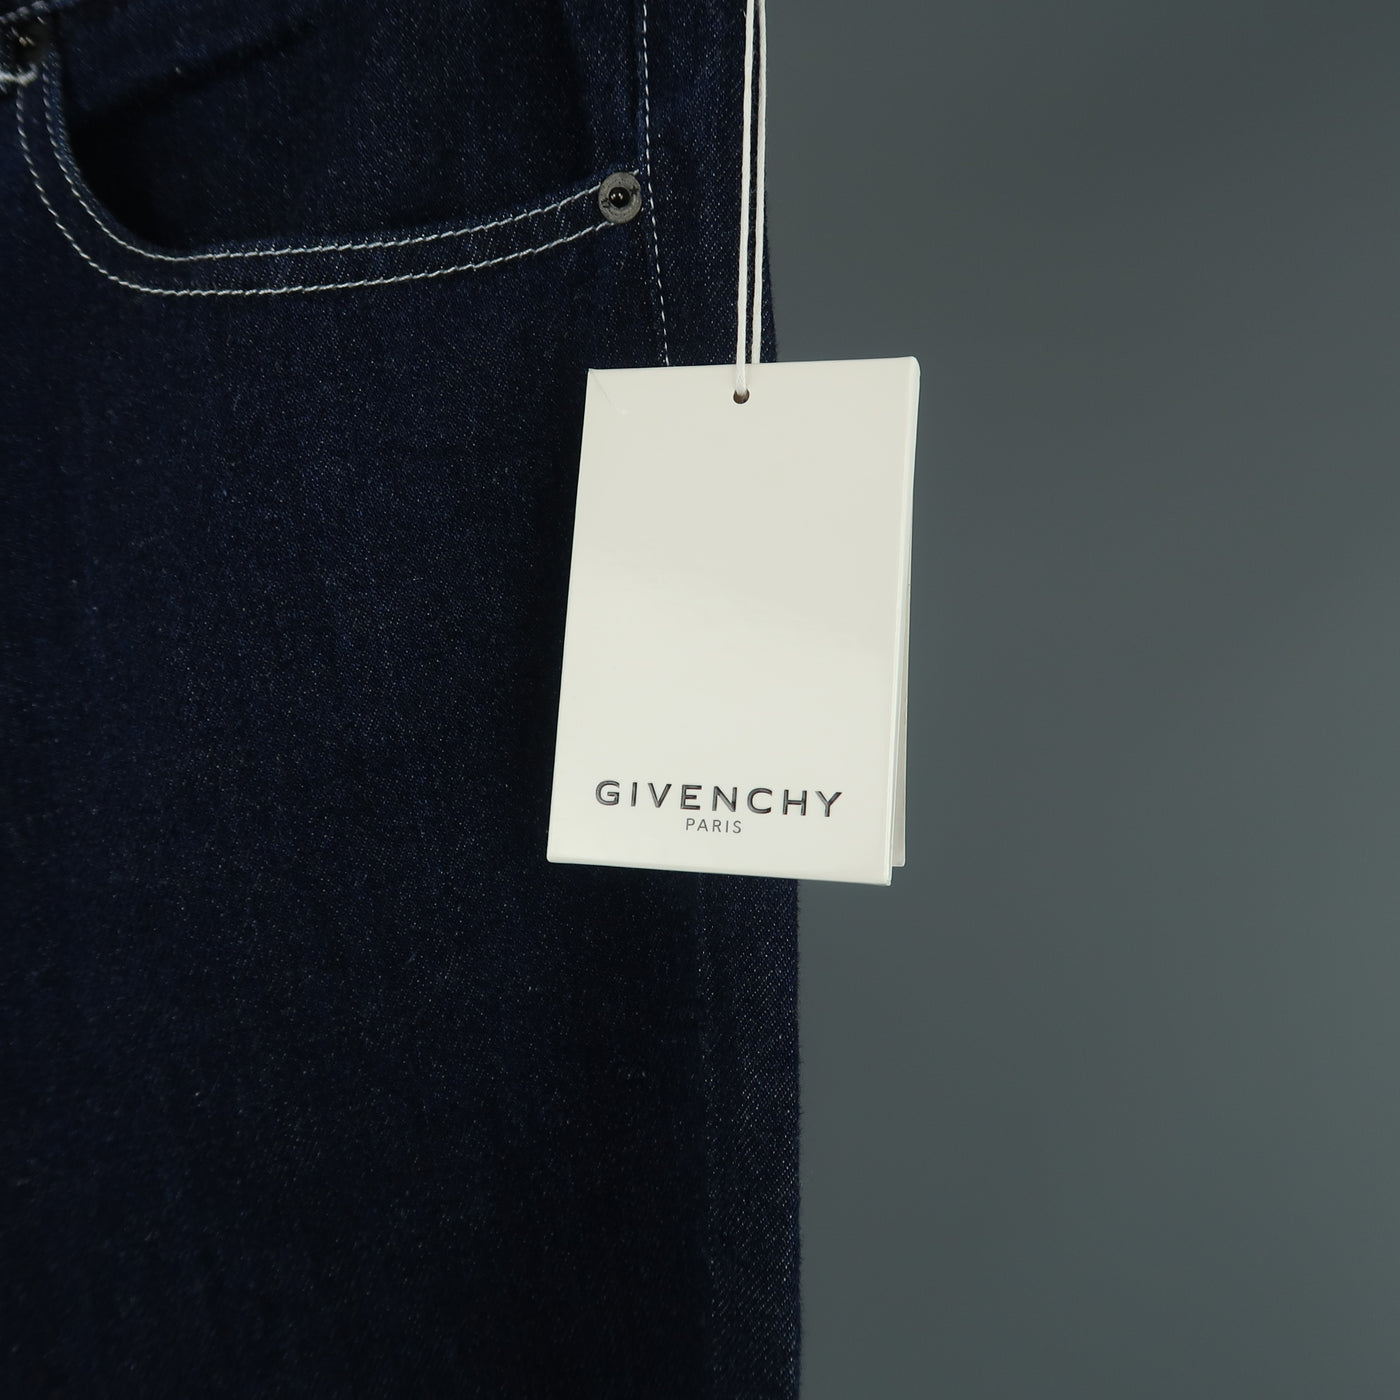 GIVENCHY Size 30 Indigo Denim Contrast Stitch Leather Pocket Jeans